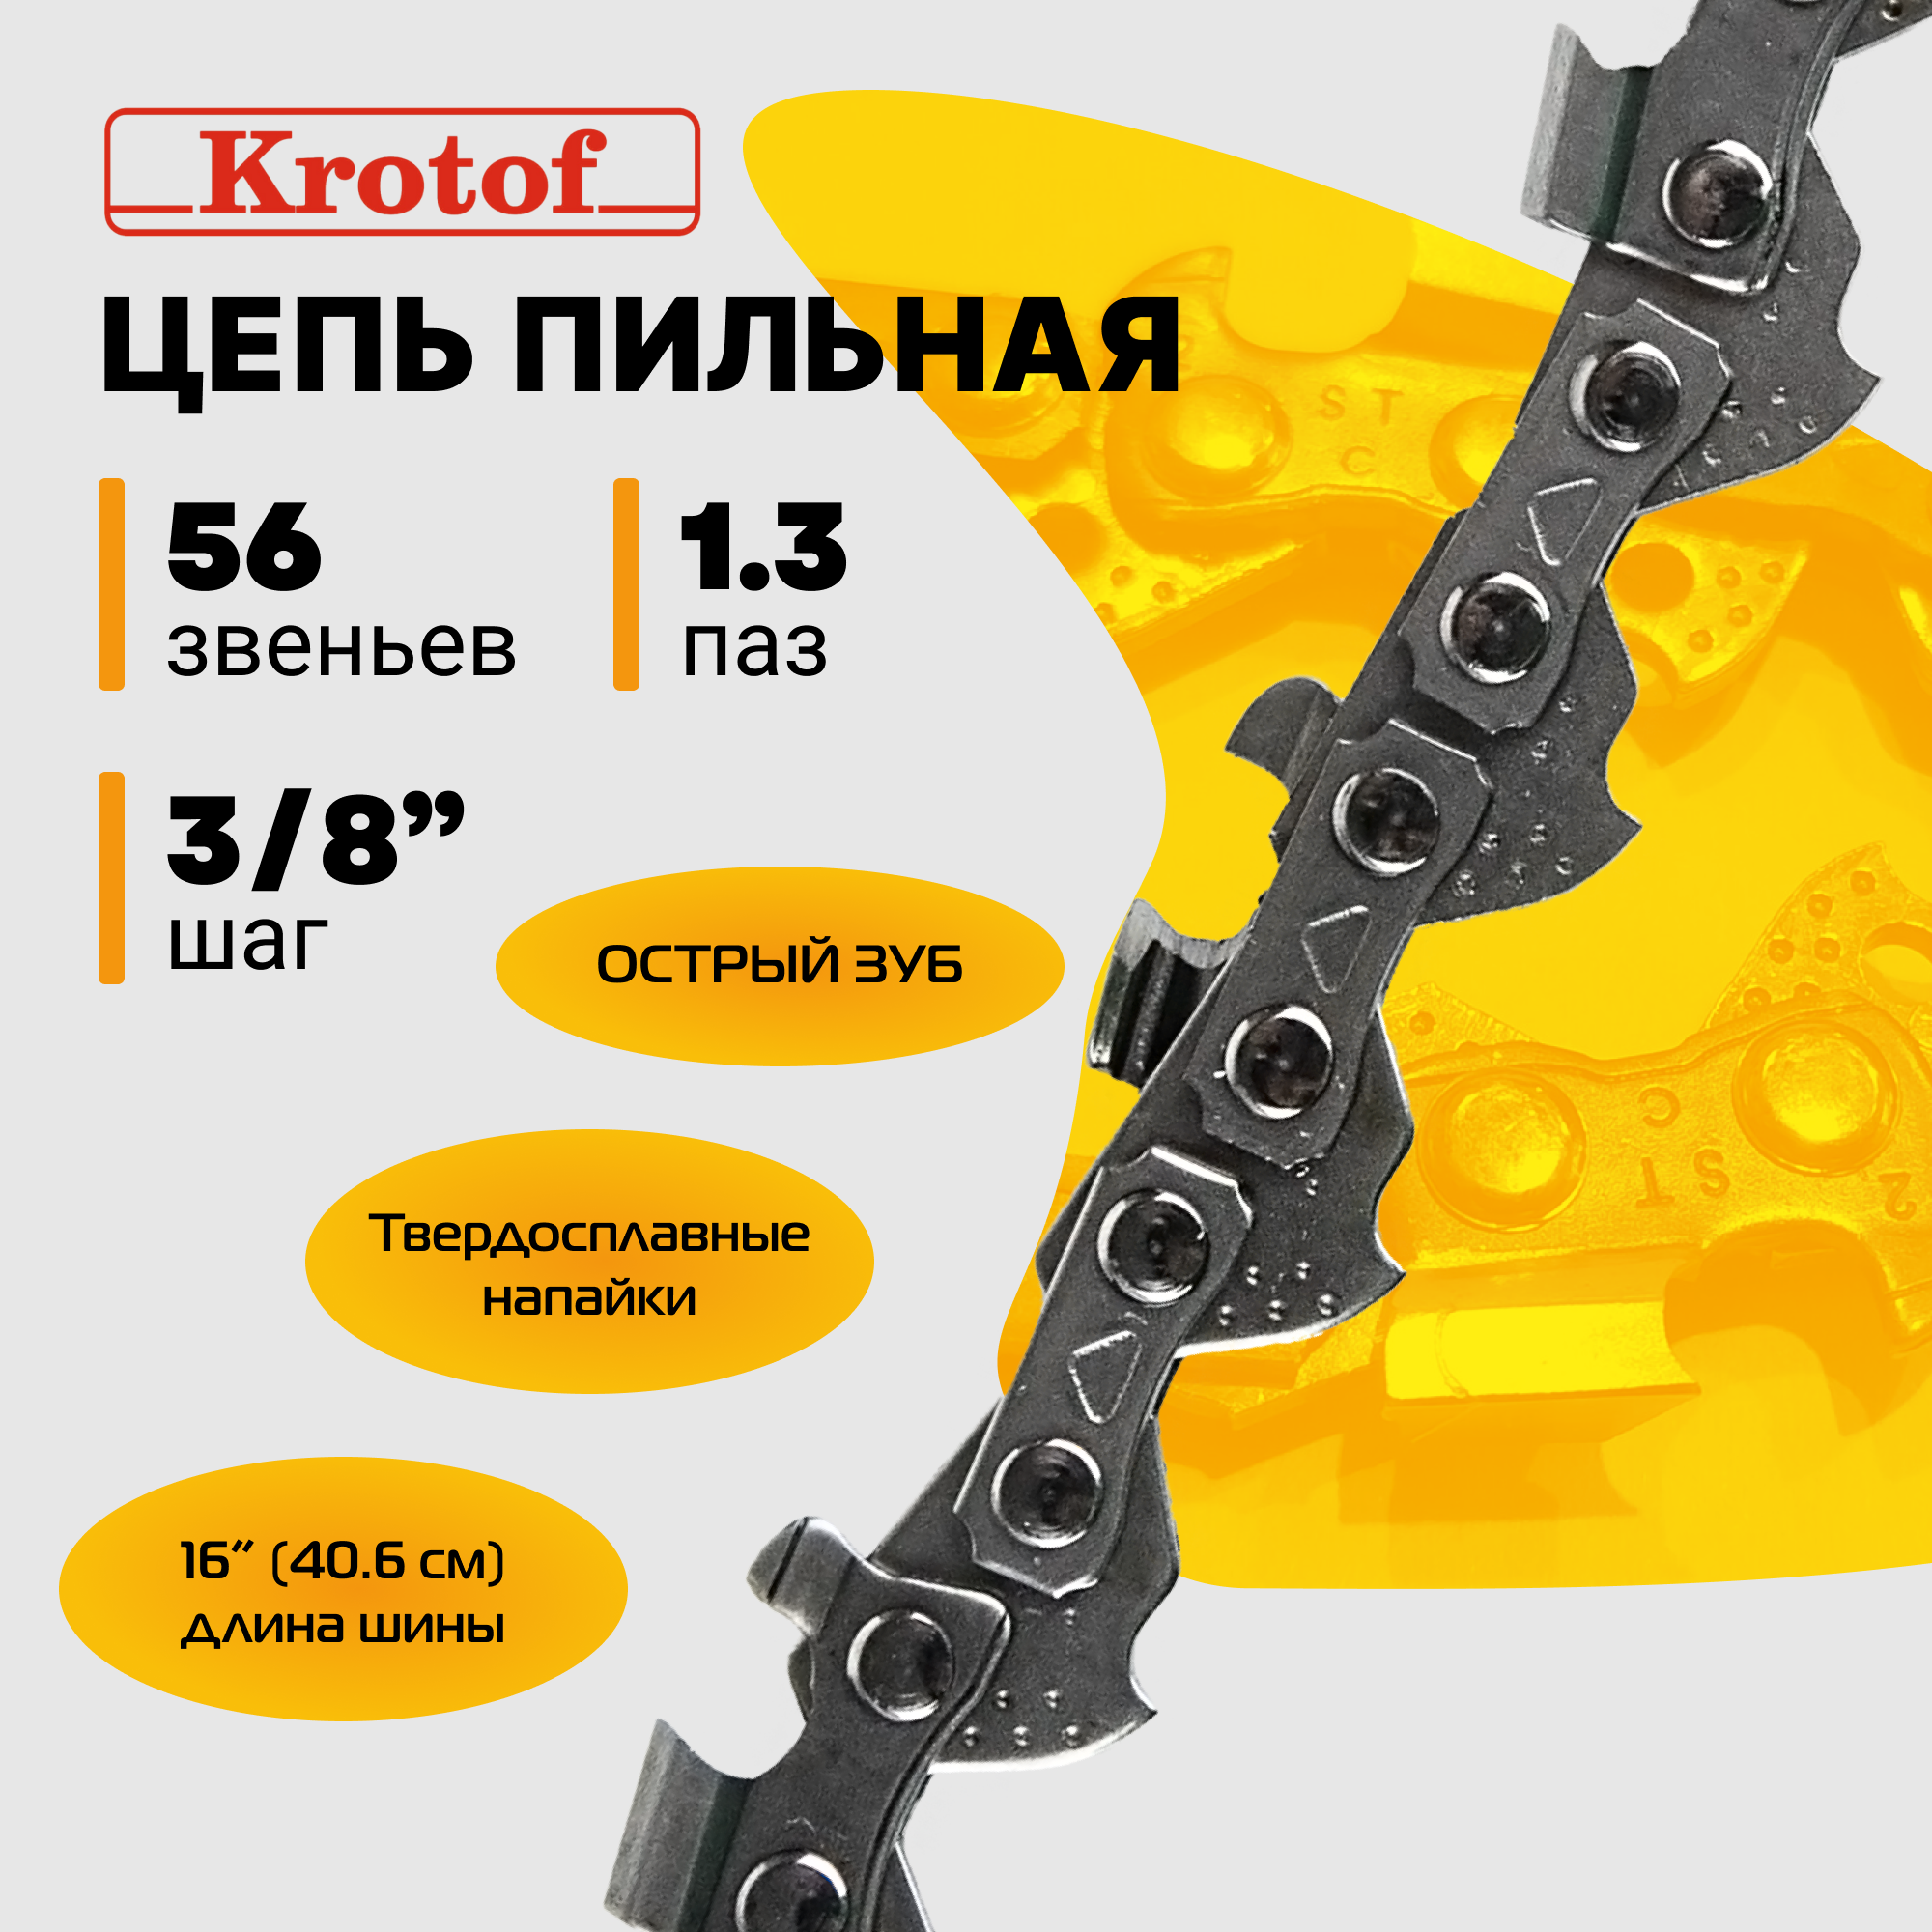 Цепь пильная Krotof LINK 3/8 1,3 56 зв. острый зуб